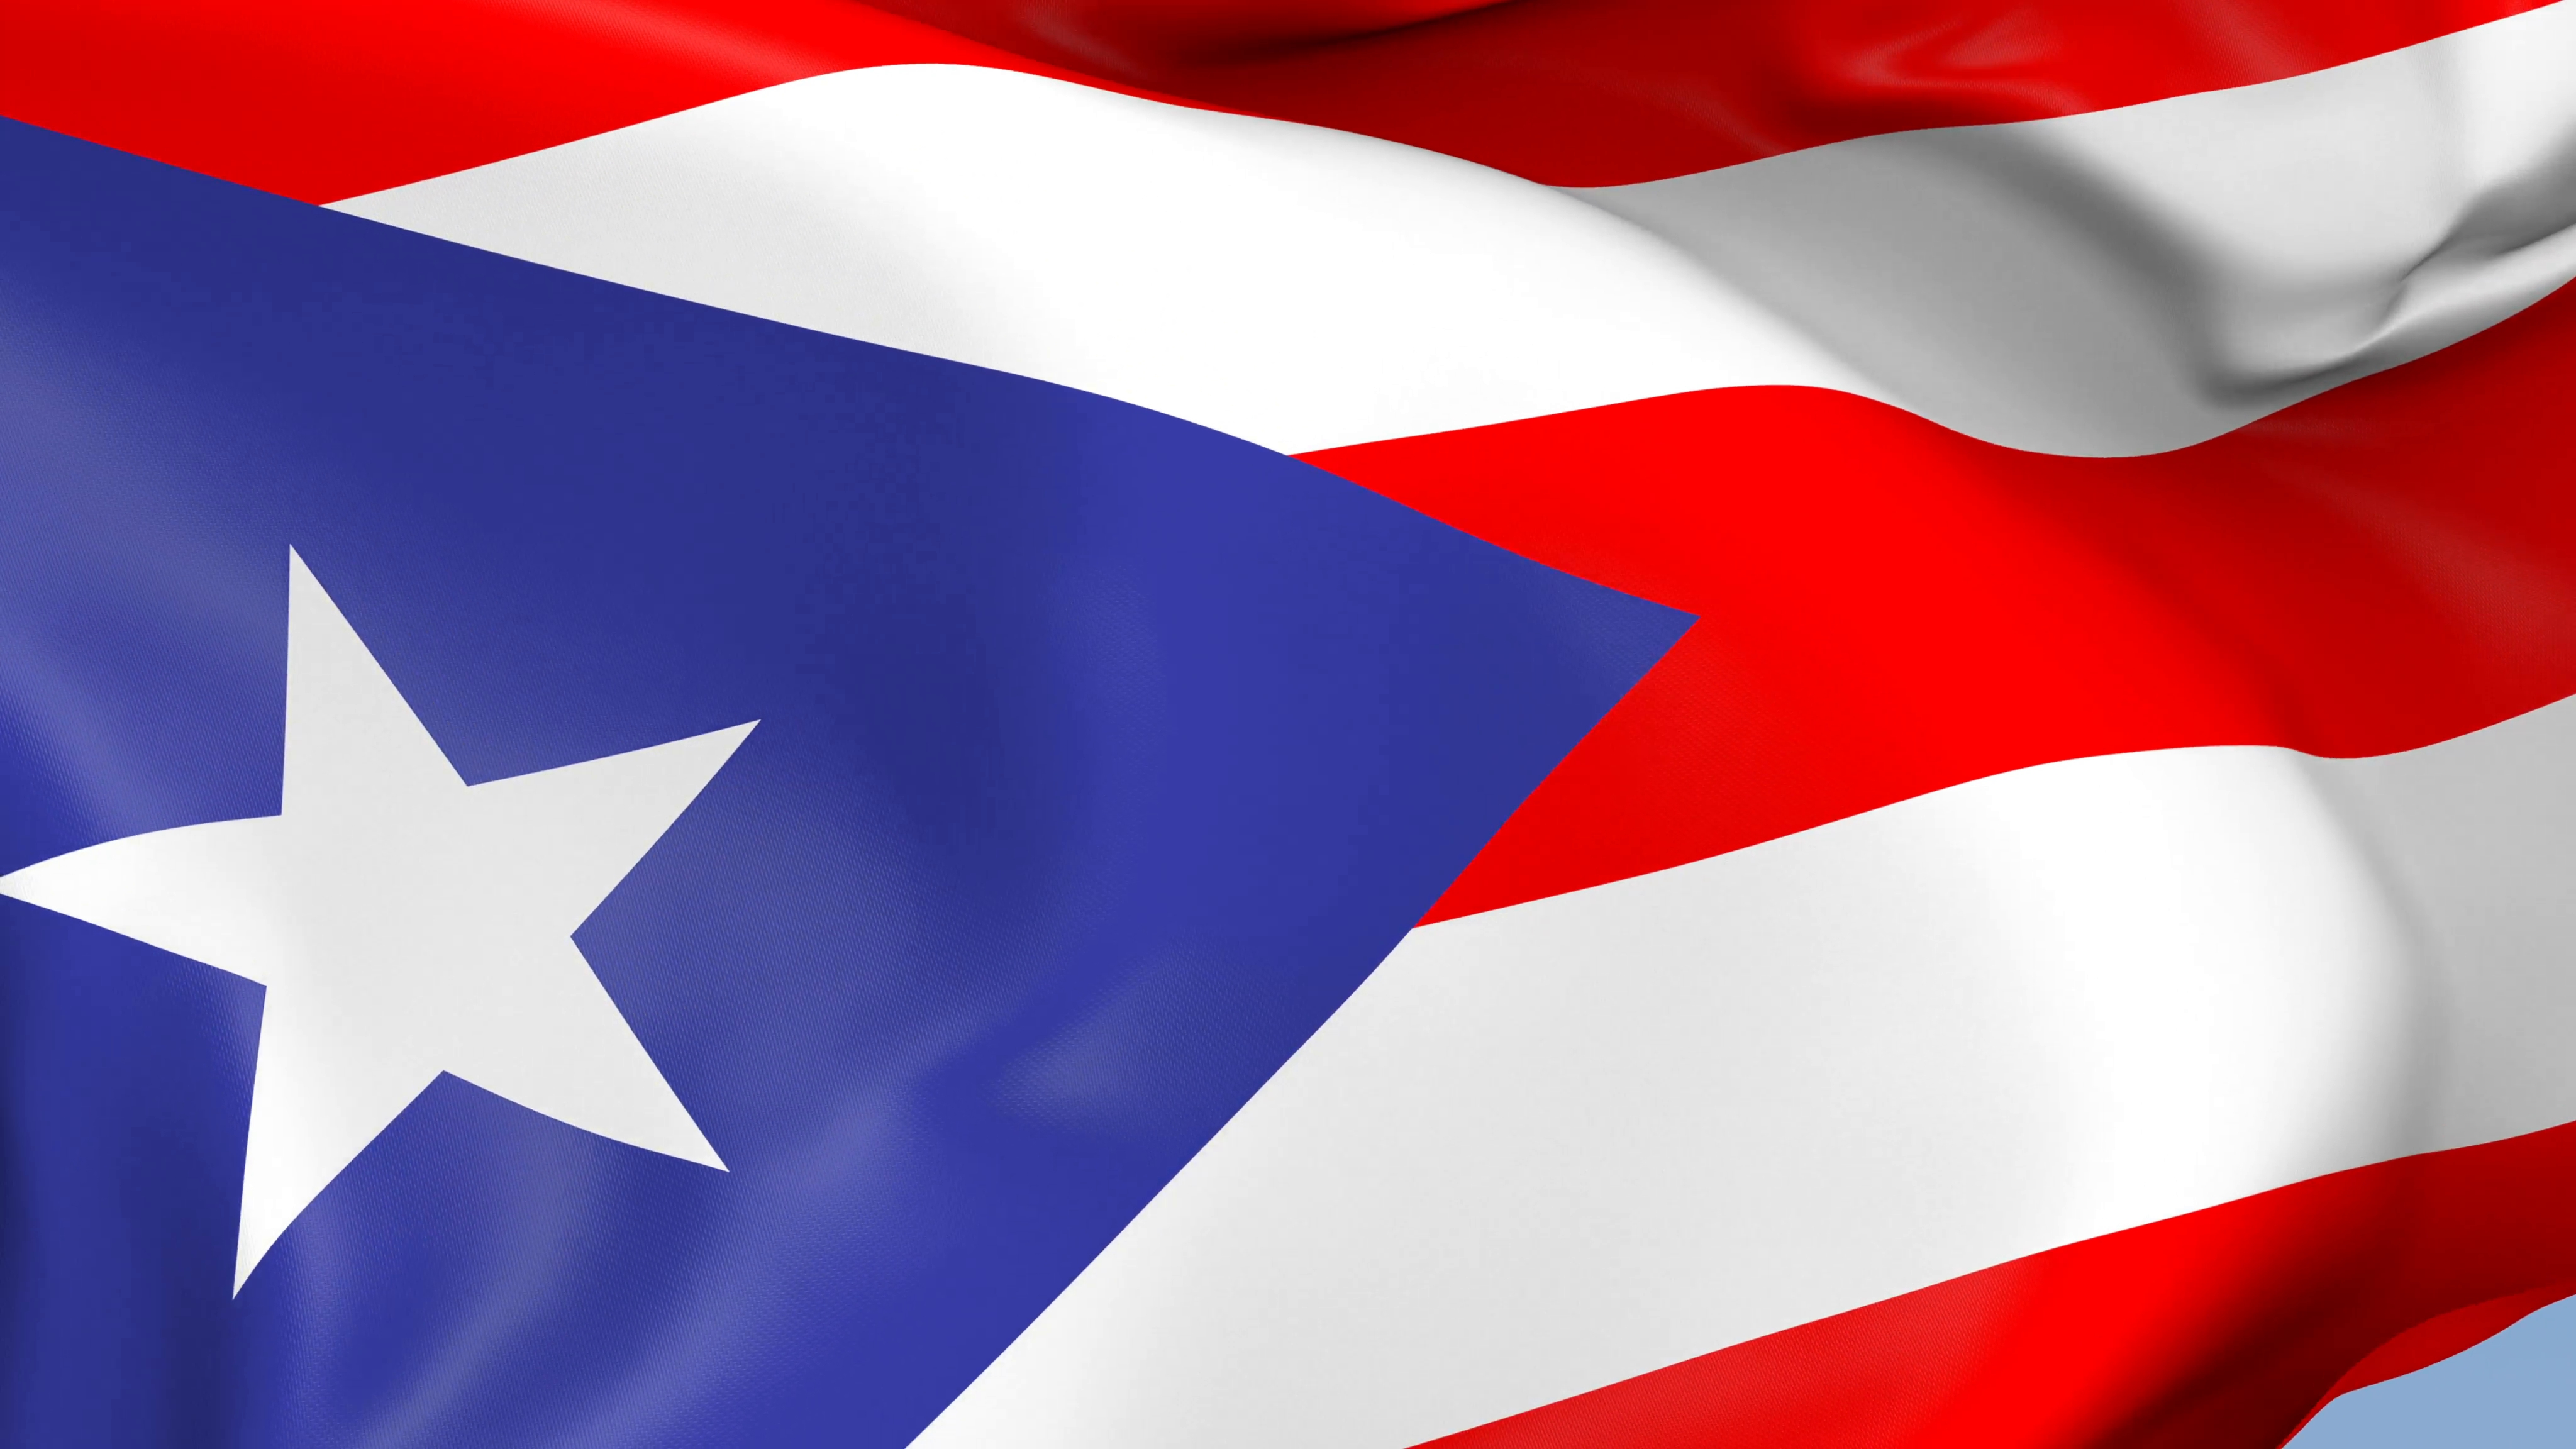 10 Best Puerto Rico Flags Images FULL HD 1080p For PC Desktop 2021